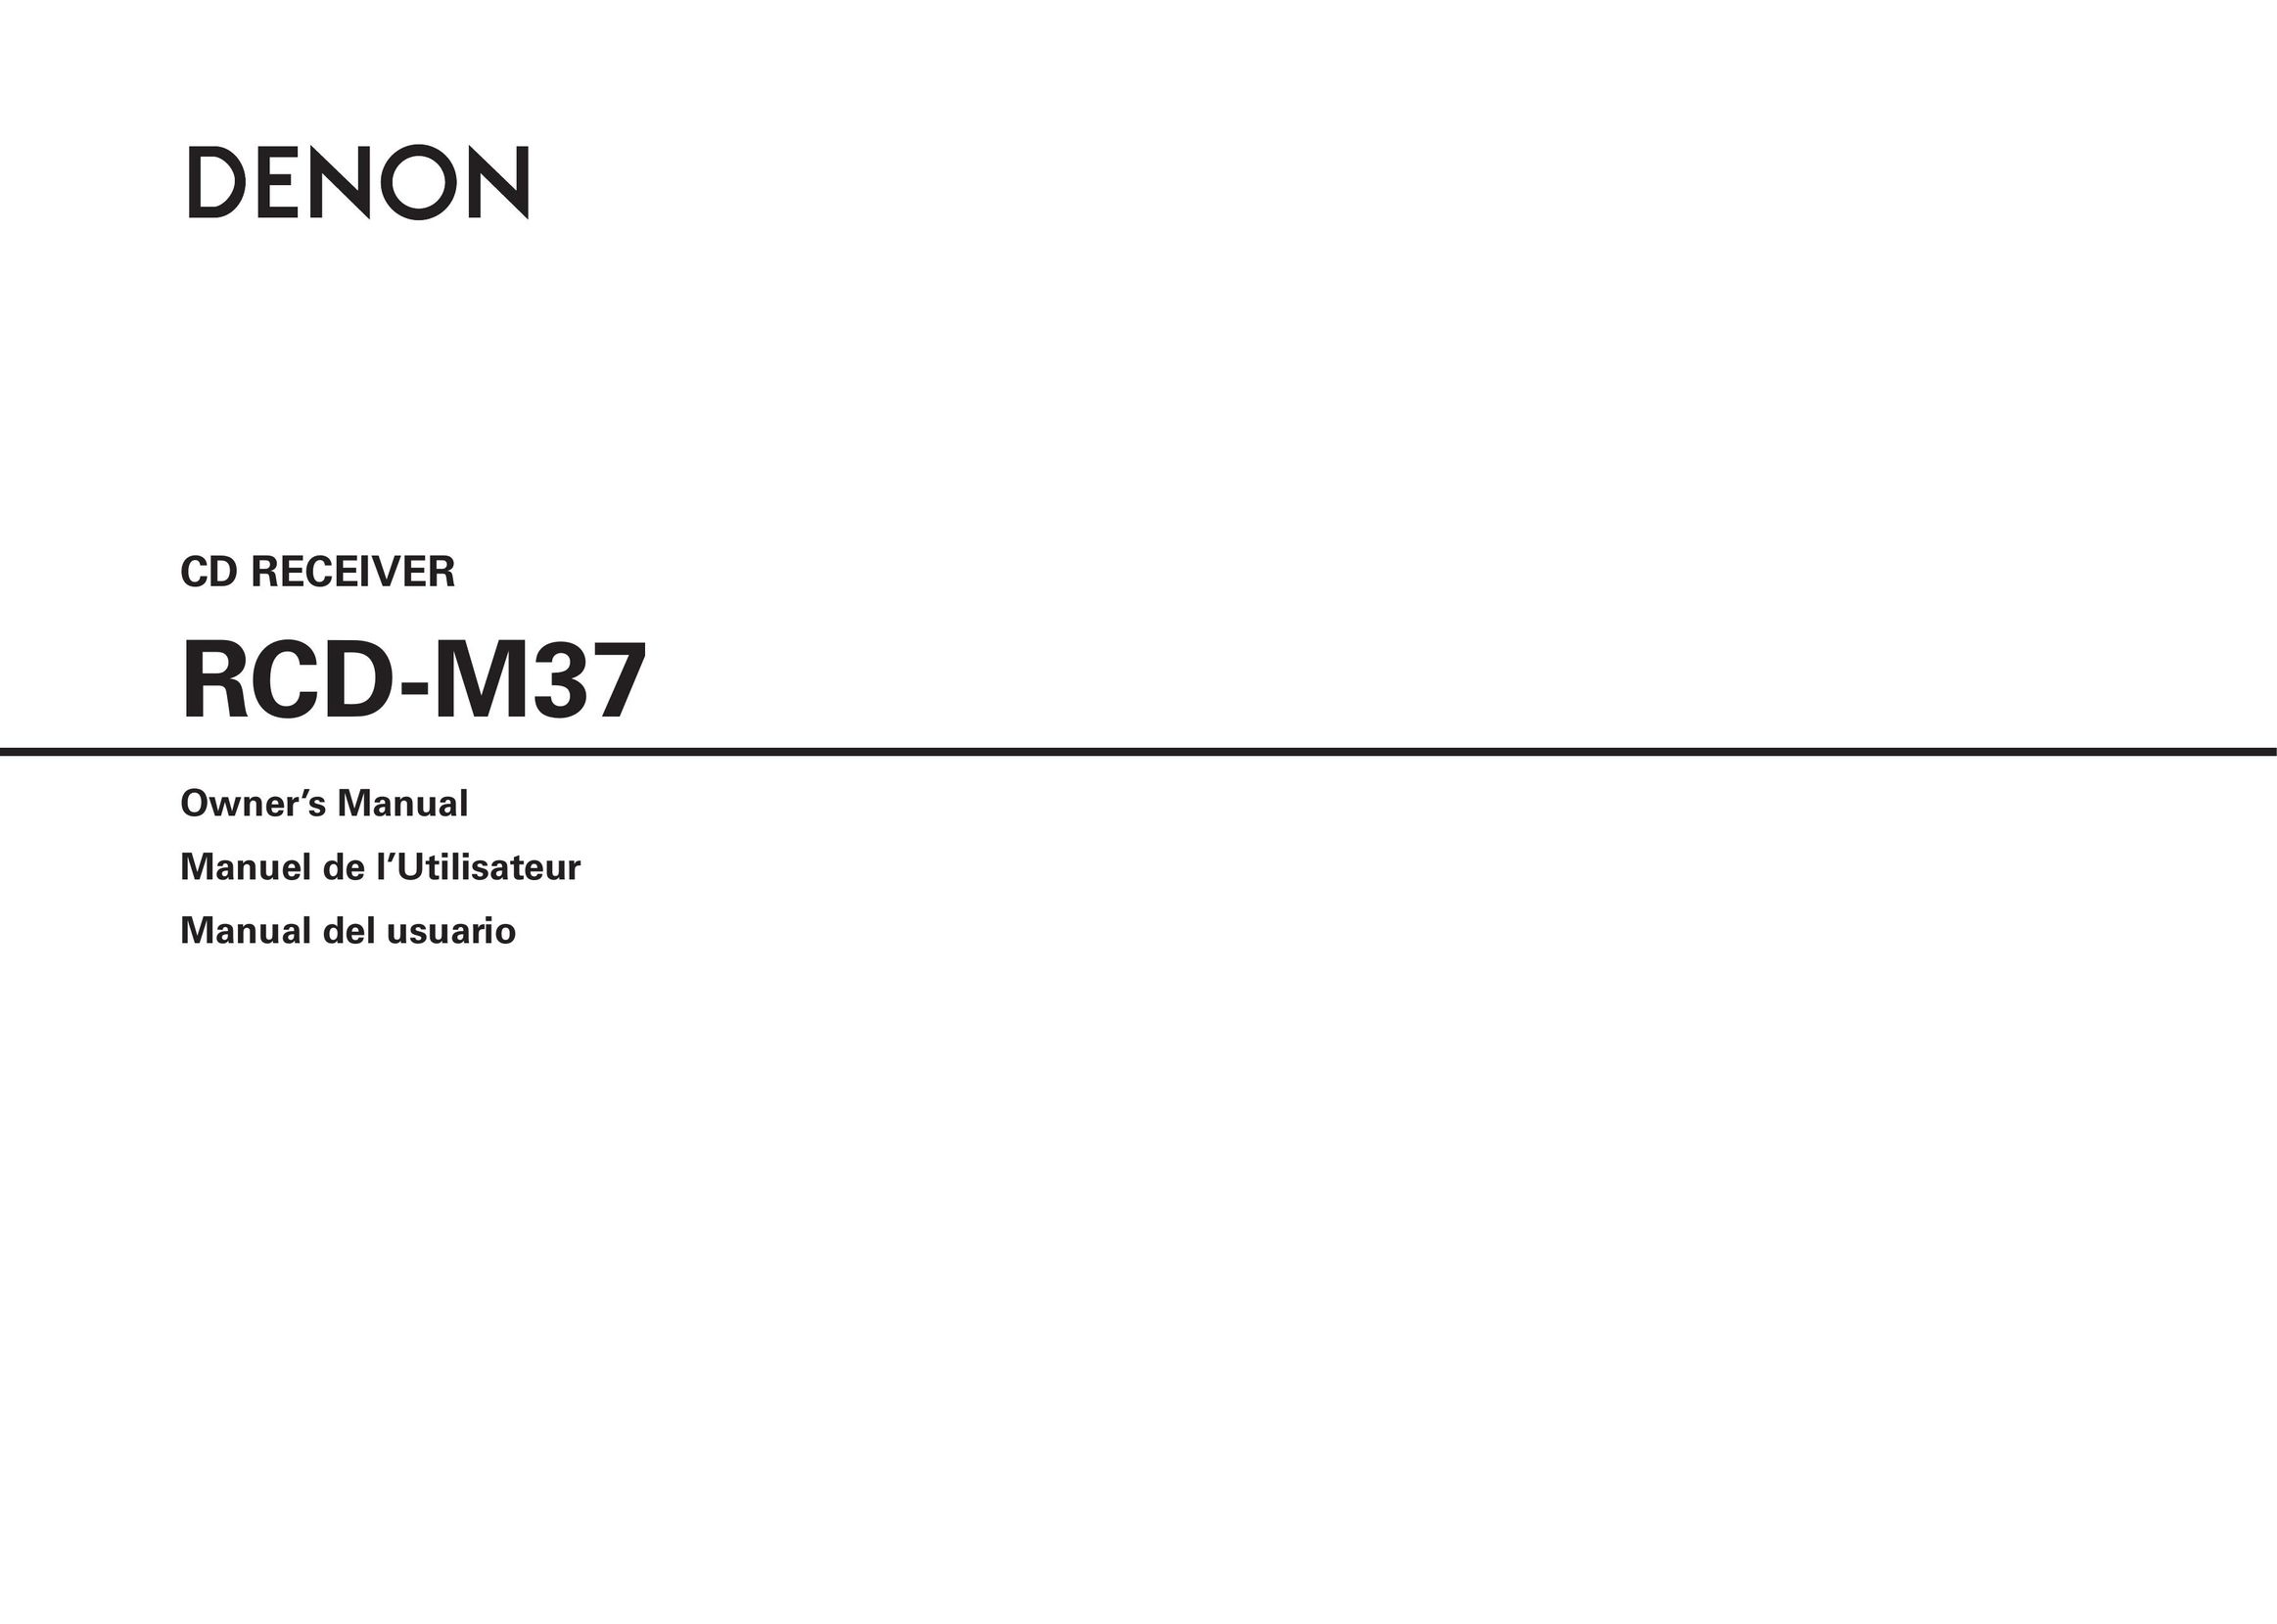 Denon RCD-M37 CD Player User Manual